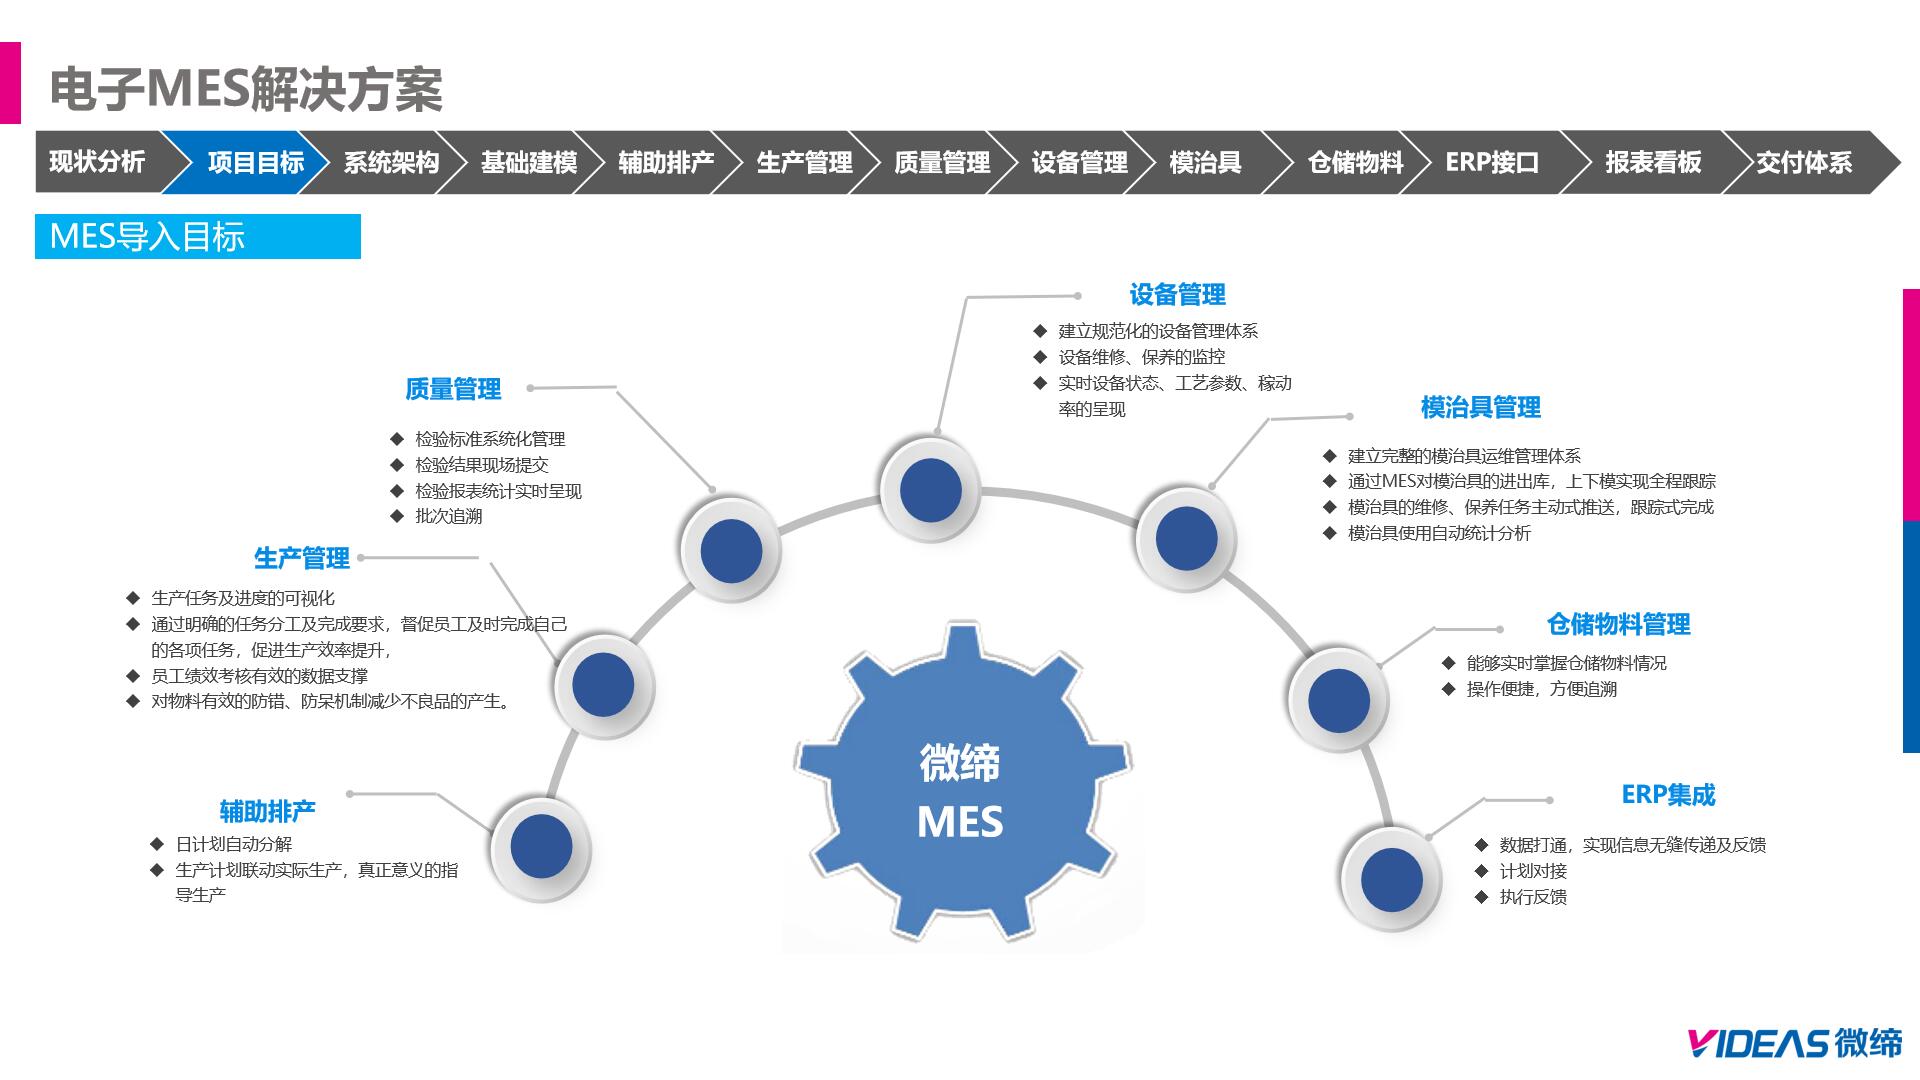 MES系统导入目标.jpg